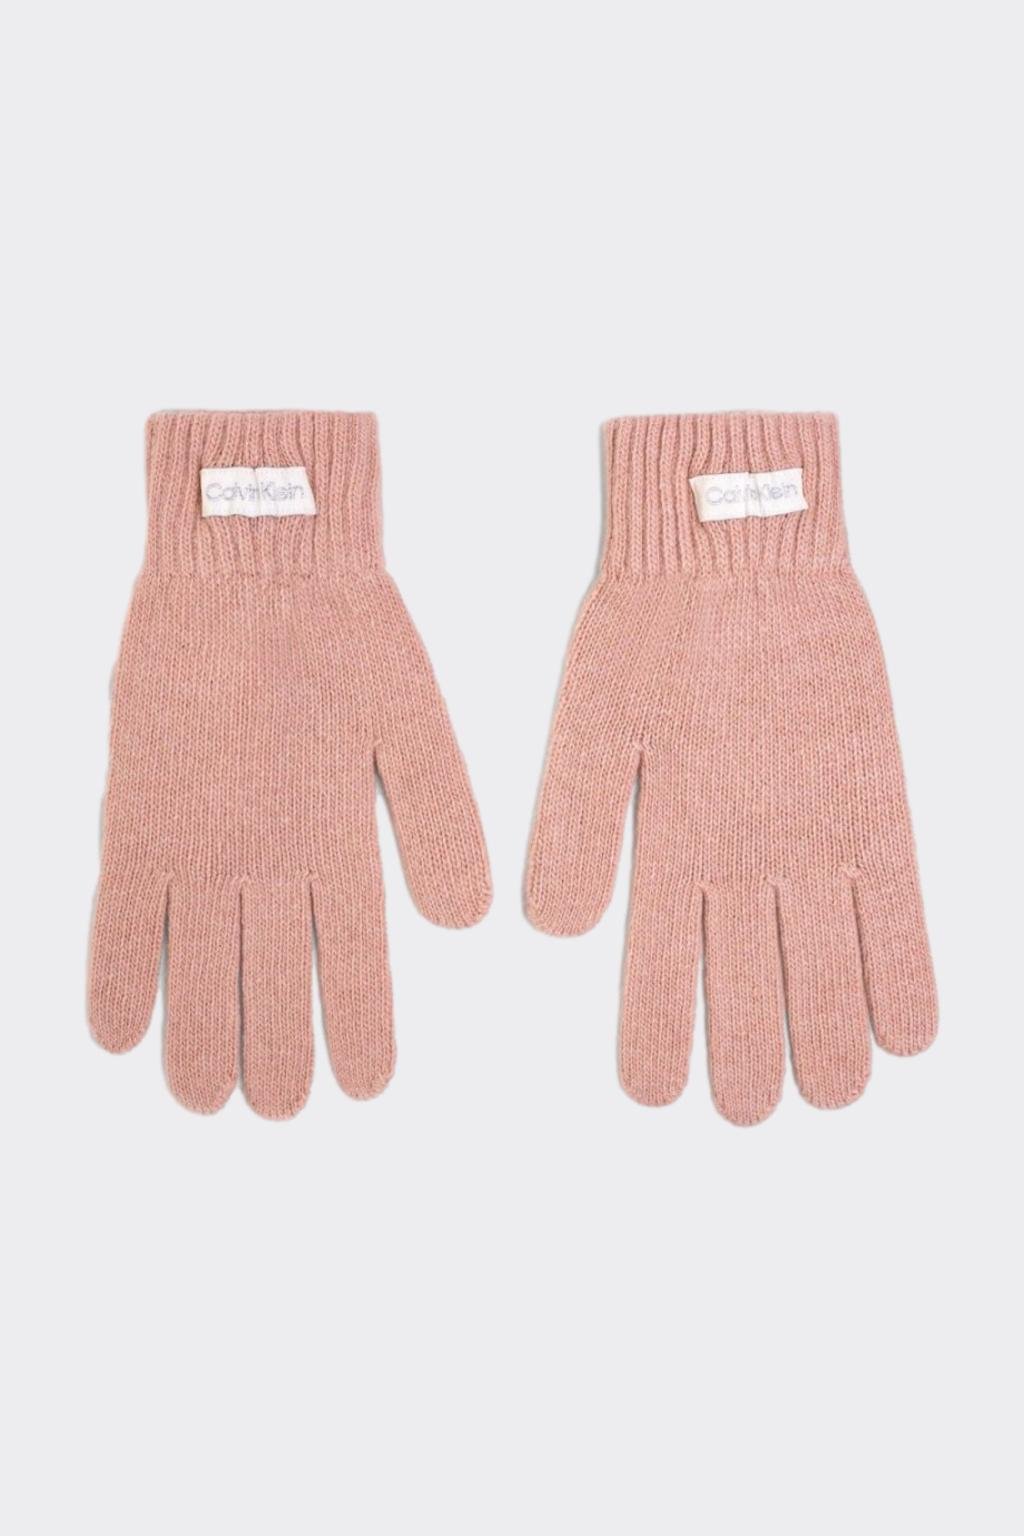 Calvin Klein rukavice dámské - růžové